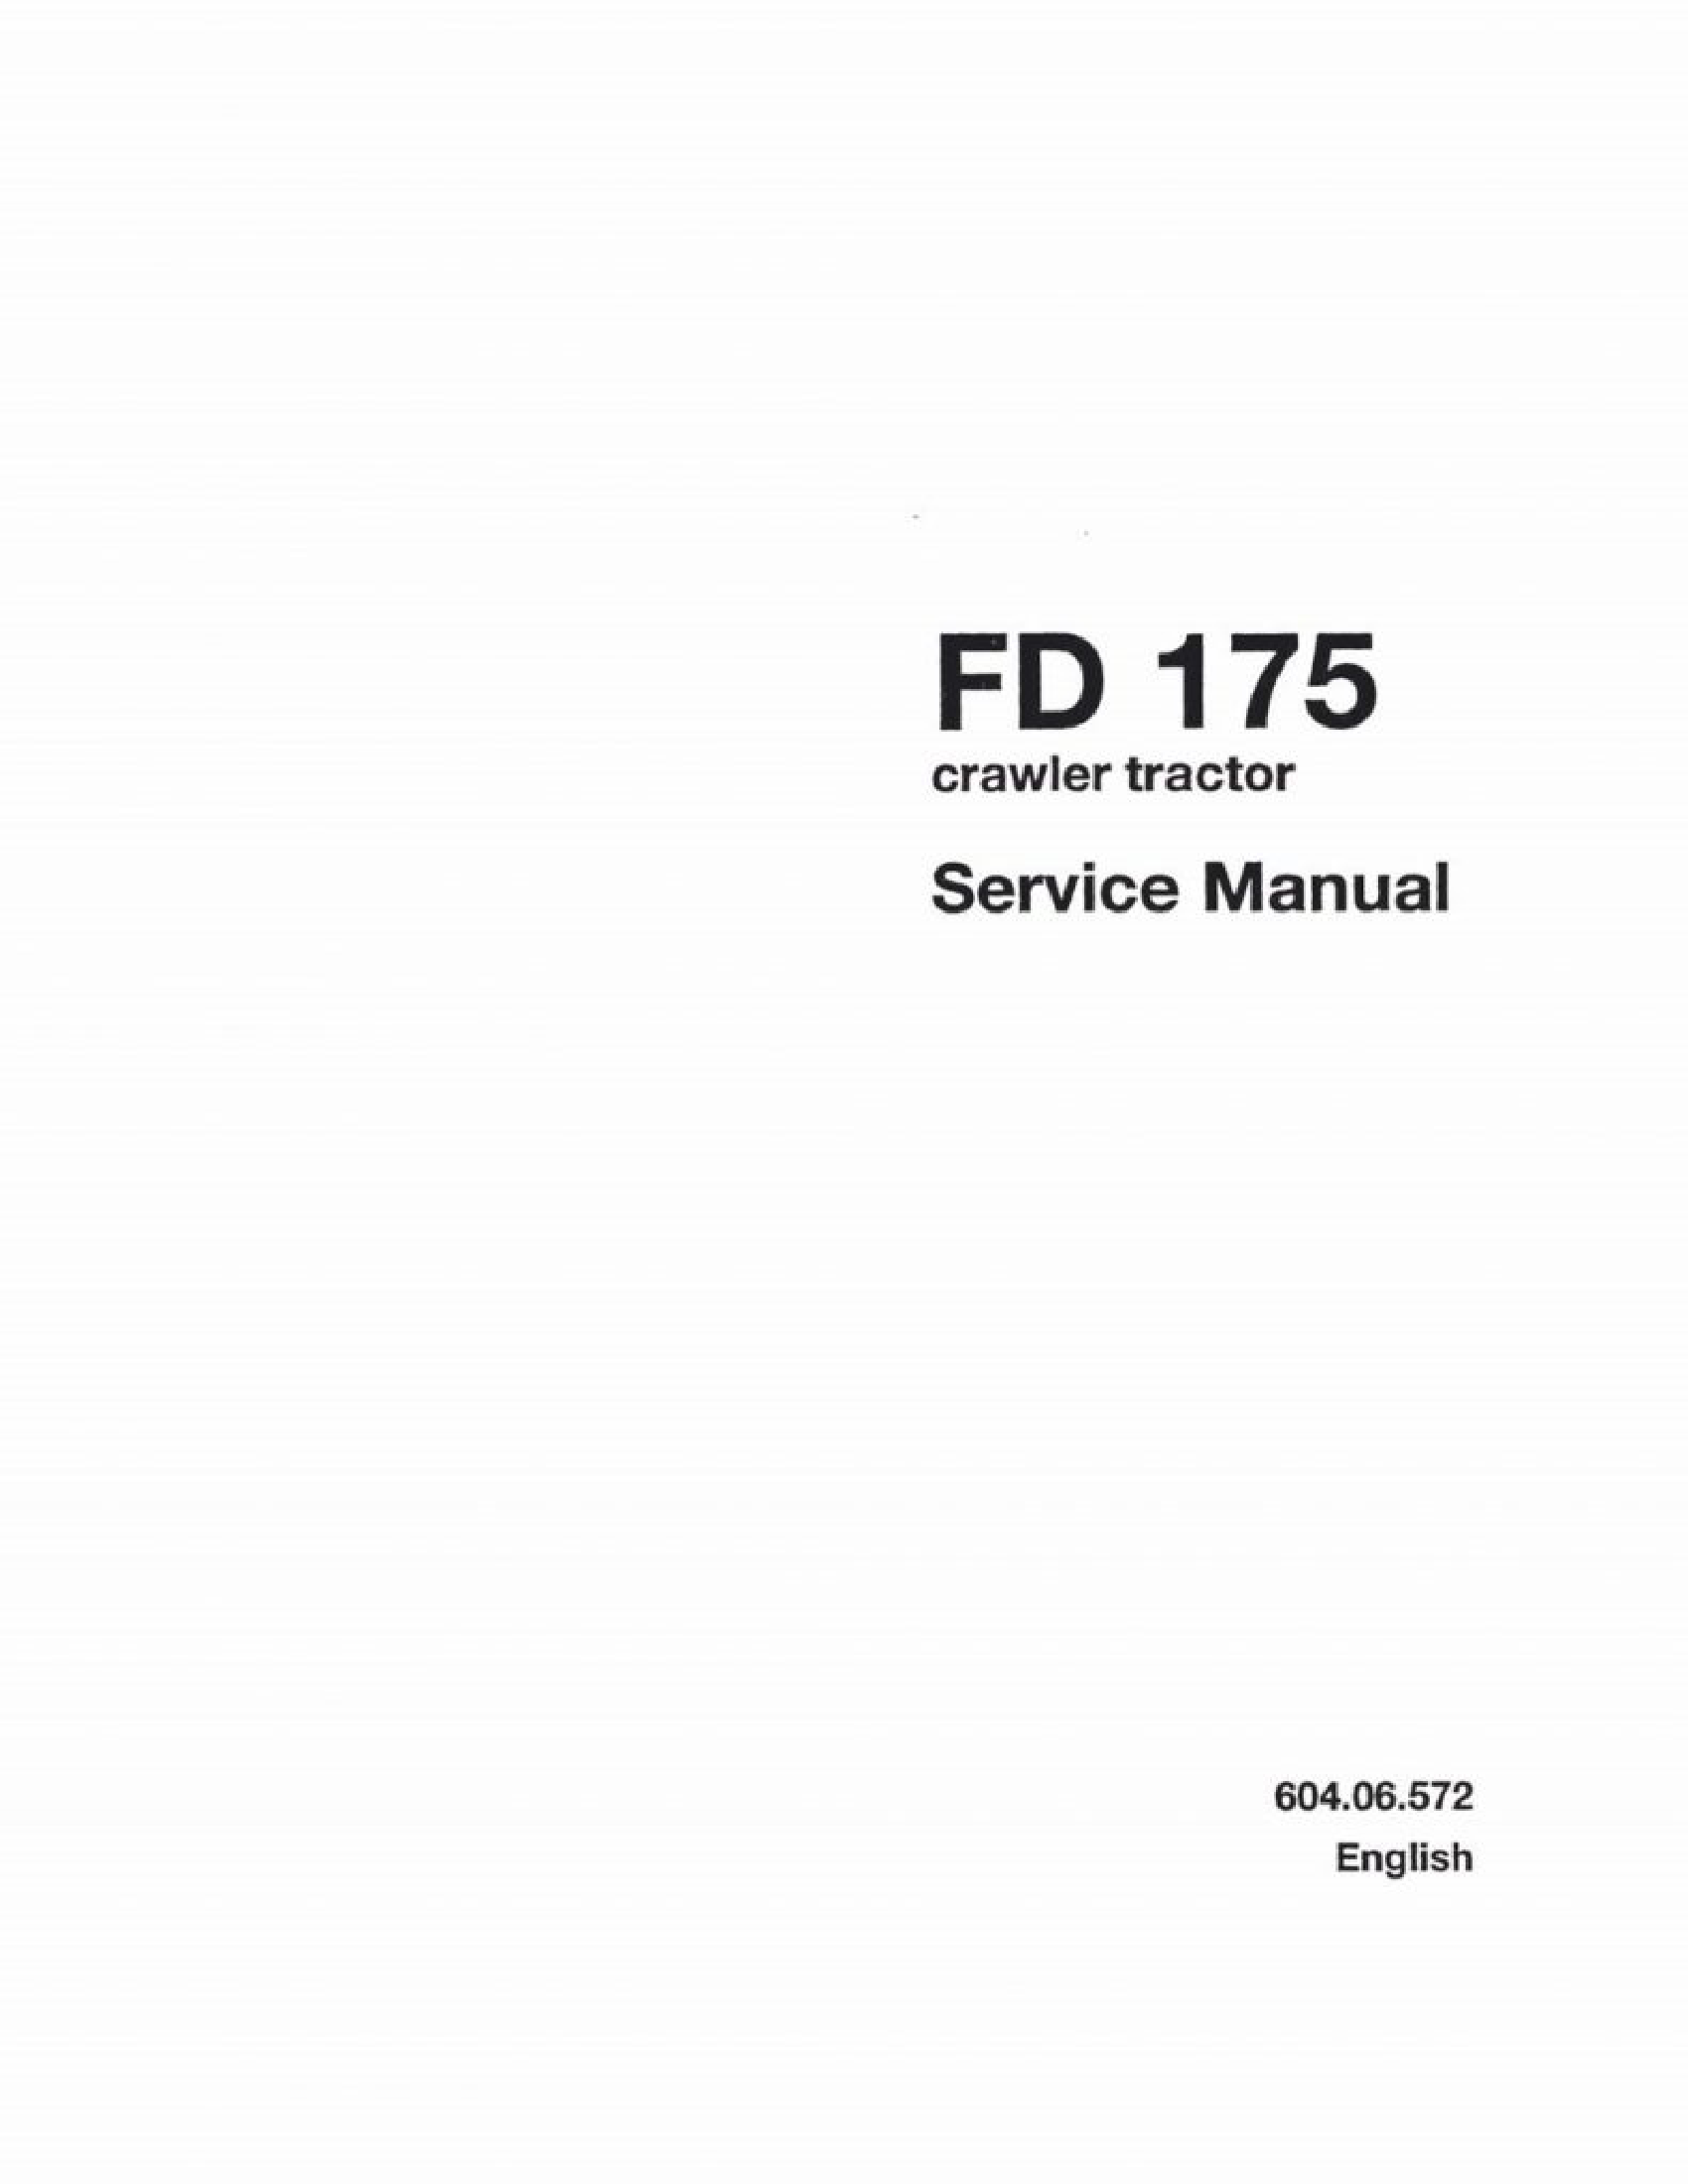 Fiat-Allis 175 FD Crawler Tractor manual